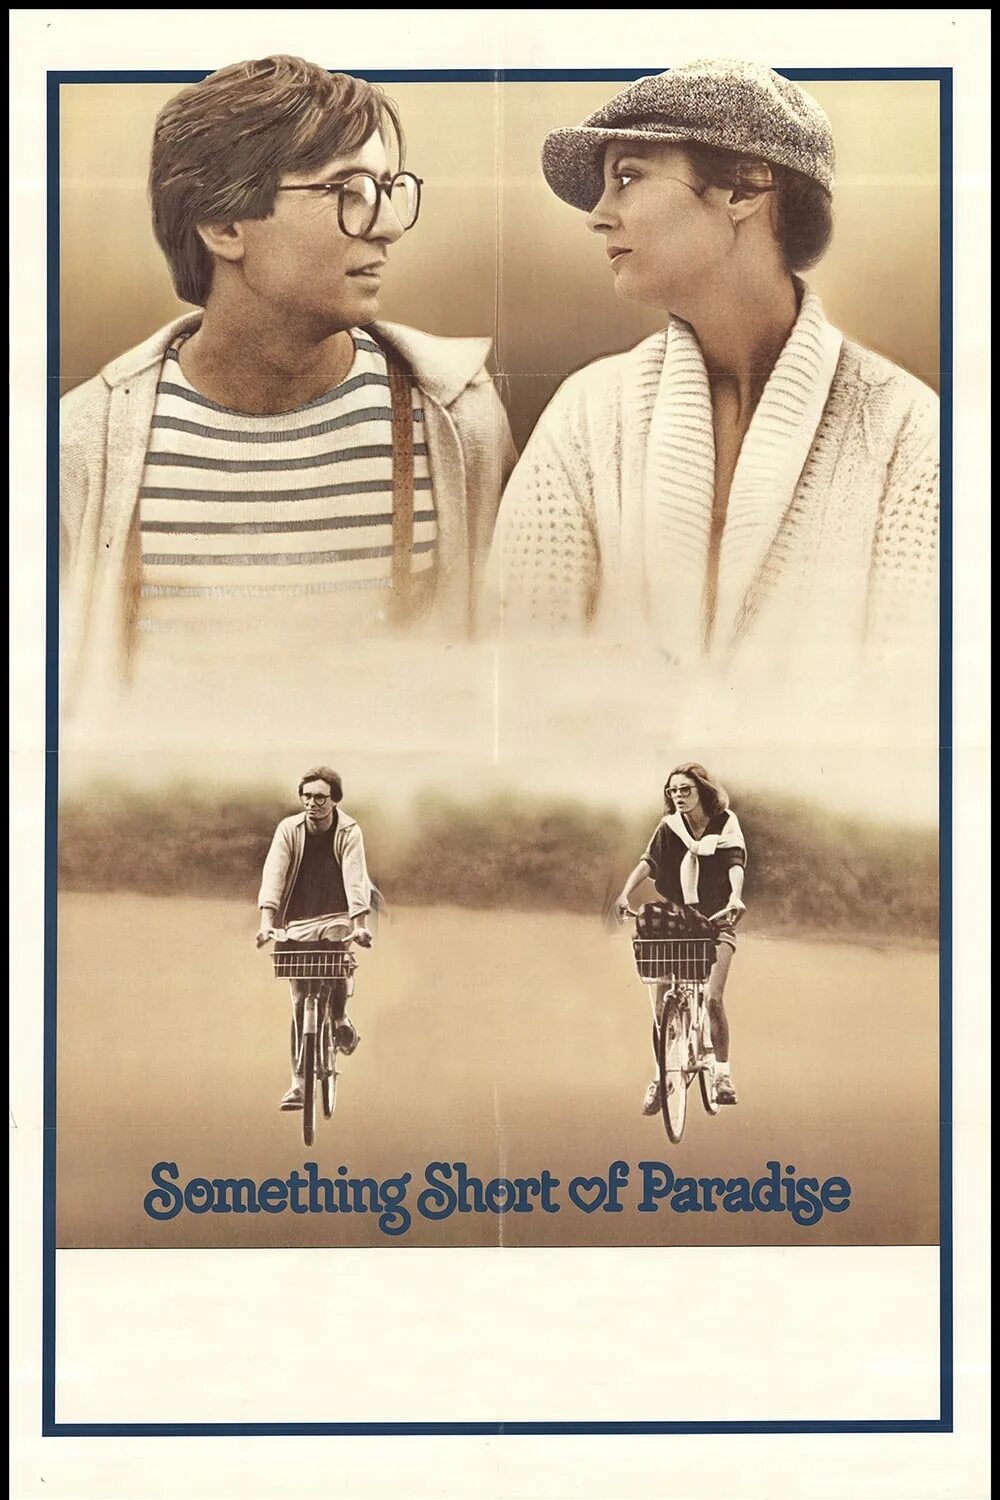 Постер отец и сын (1979).